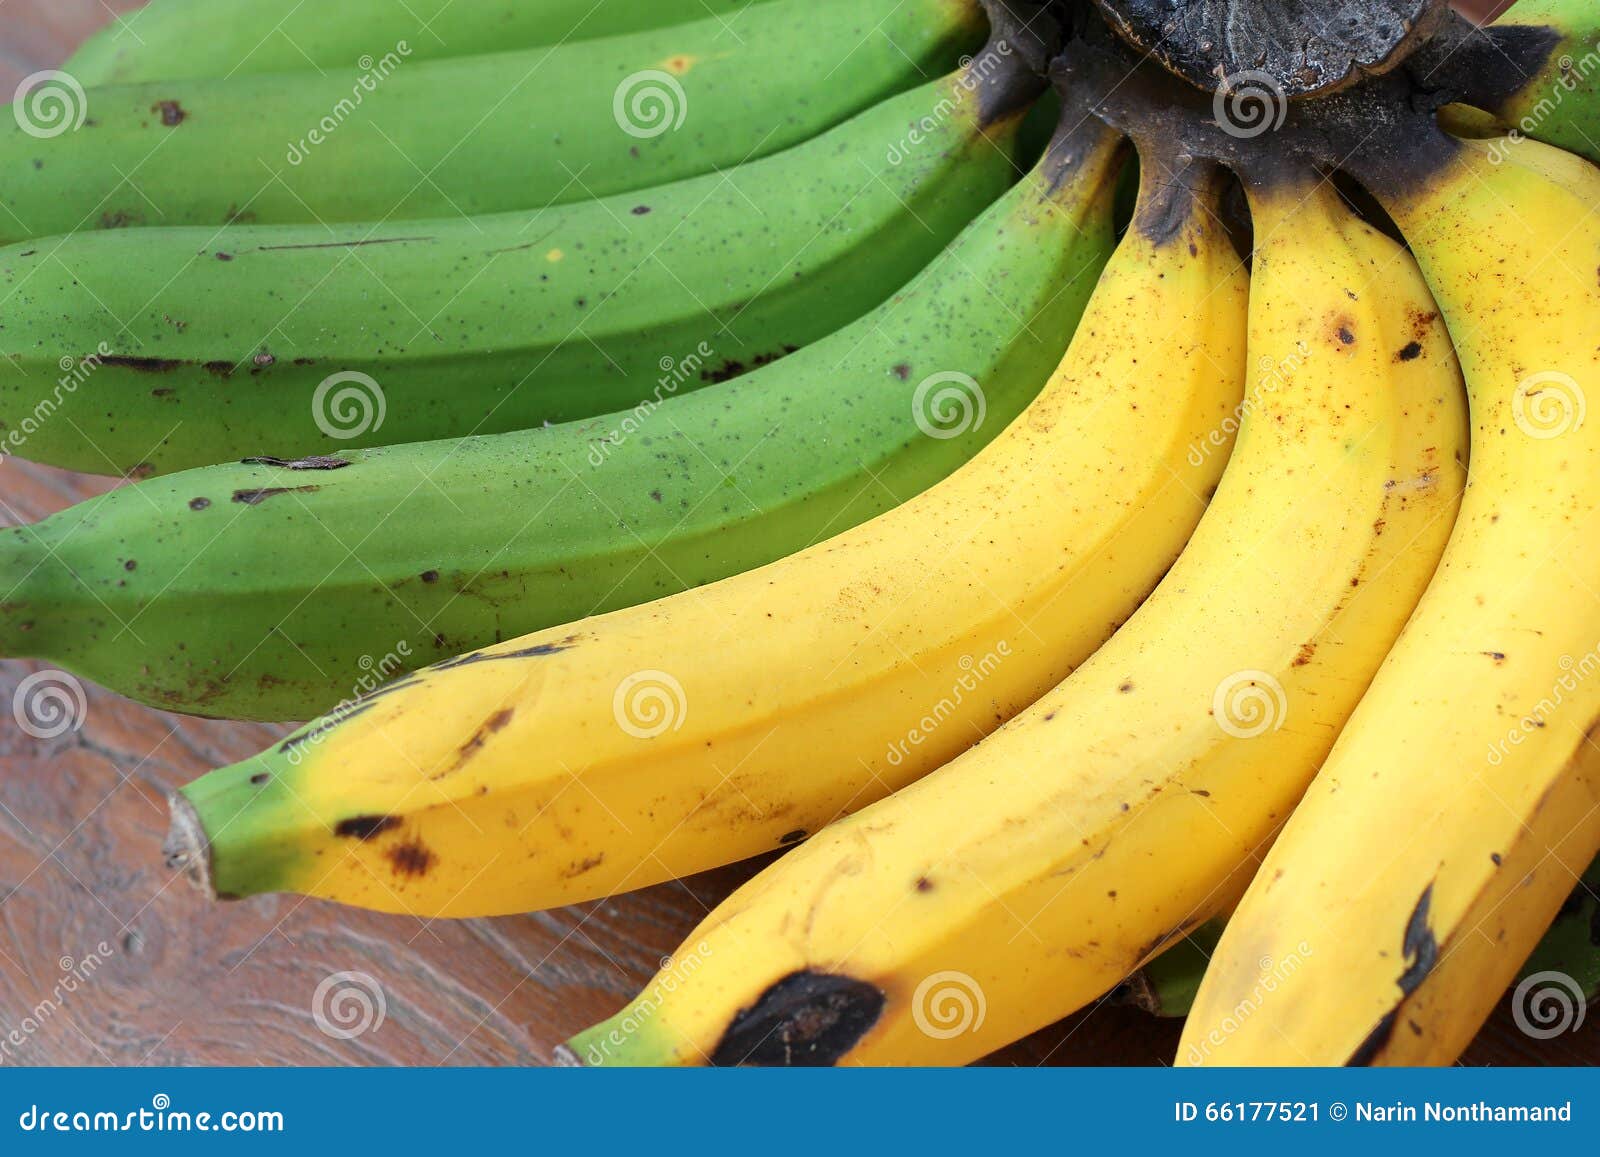 Fresh Organic Ripe Bananas and Raw Bananas in One Banana Bunch on a Wooden  Picnic Table Stock Image - Image of market, natural: 66177521